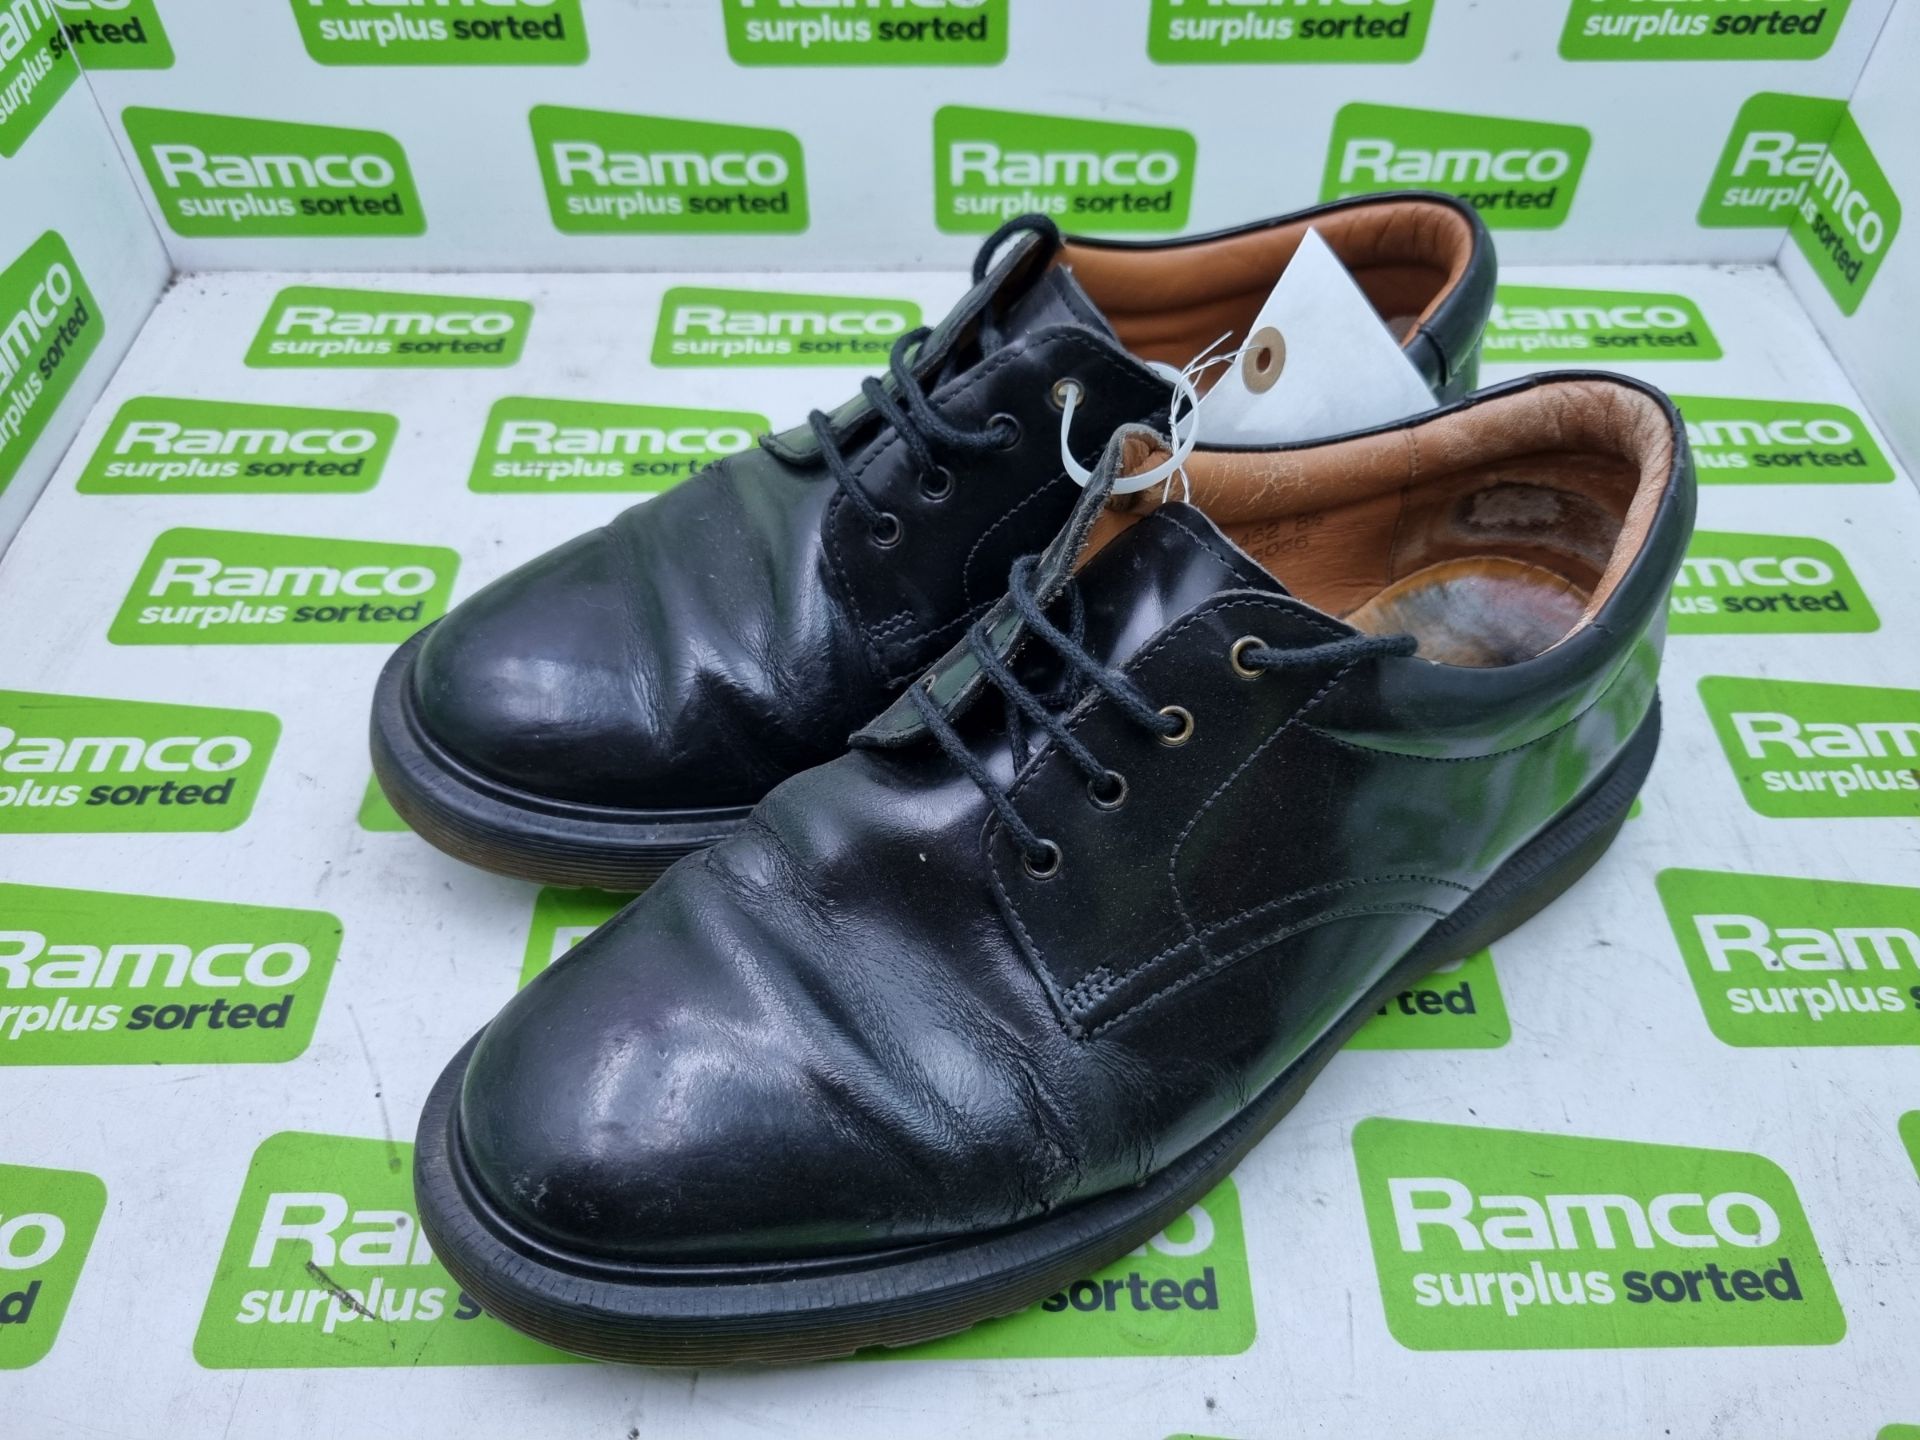 Solovair Black Leather Shoes 'Postman Style' Pair - Size EU 42.5, UK 8.5 - 30x25x15cm - Image 2 of 4